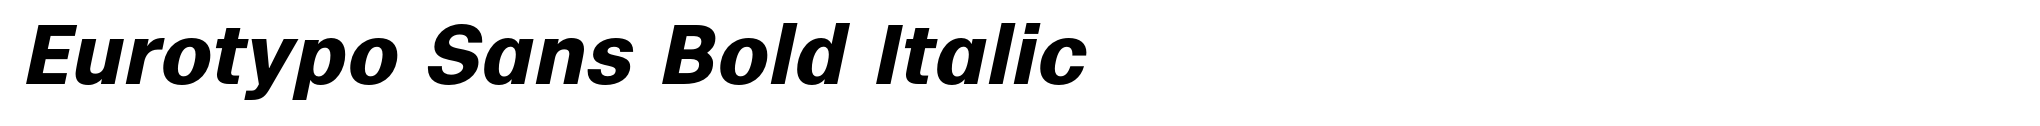 Eurotypo Sans Bold Italic image